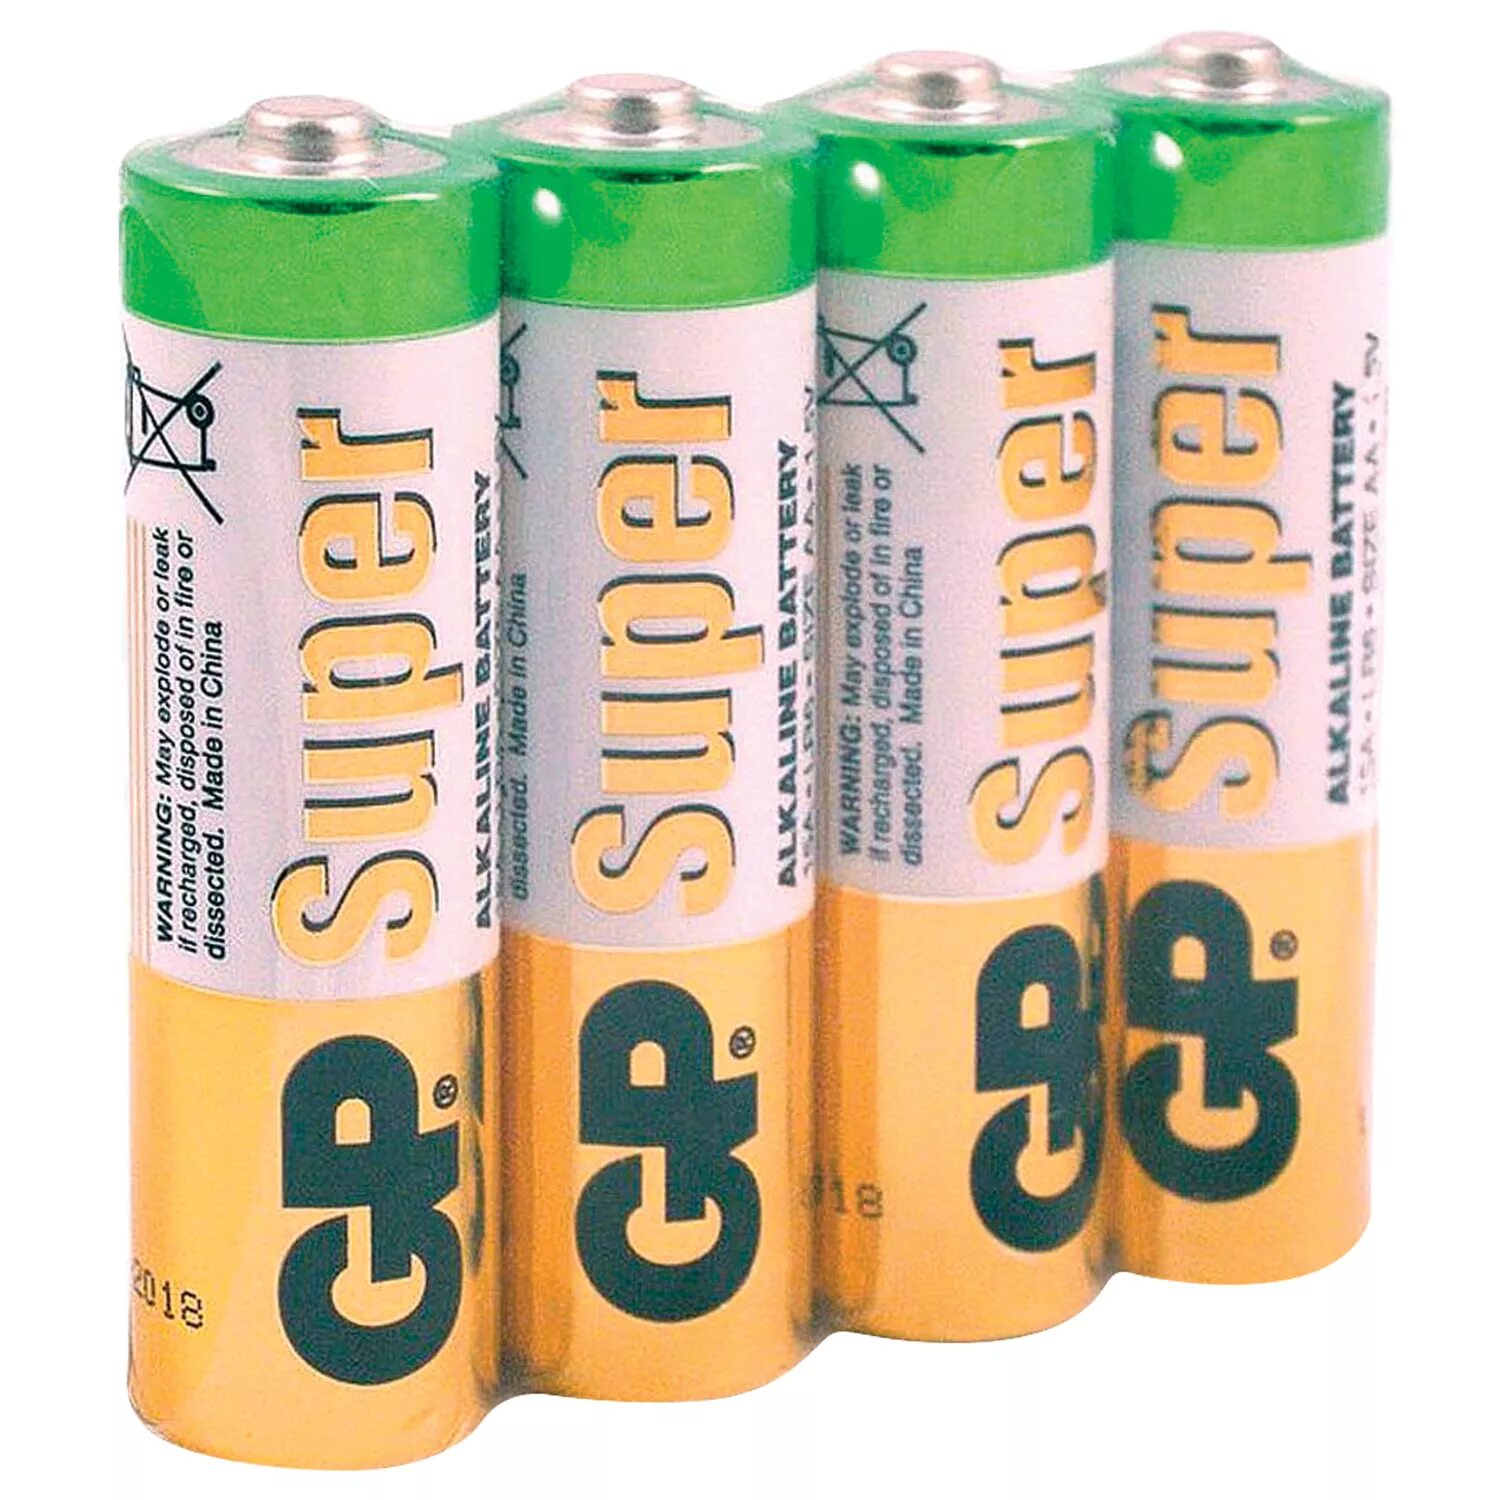 Батарейки GP super, AA (lr06, 15а), алкалиновые, комплект 4 шт, в блистере, 15a-2cr4. Батарейка GP 15ars-2sb4. Батарейка GP 15ars-2sb4 AA. Батарейки GP super, AAA (lr03, 24а), алкалиновые, комплект 4 шт., в пленке, 24ars-2sb4. Gp batteries super